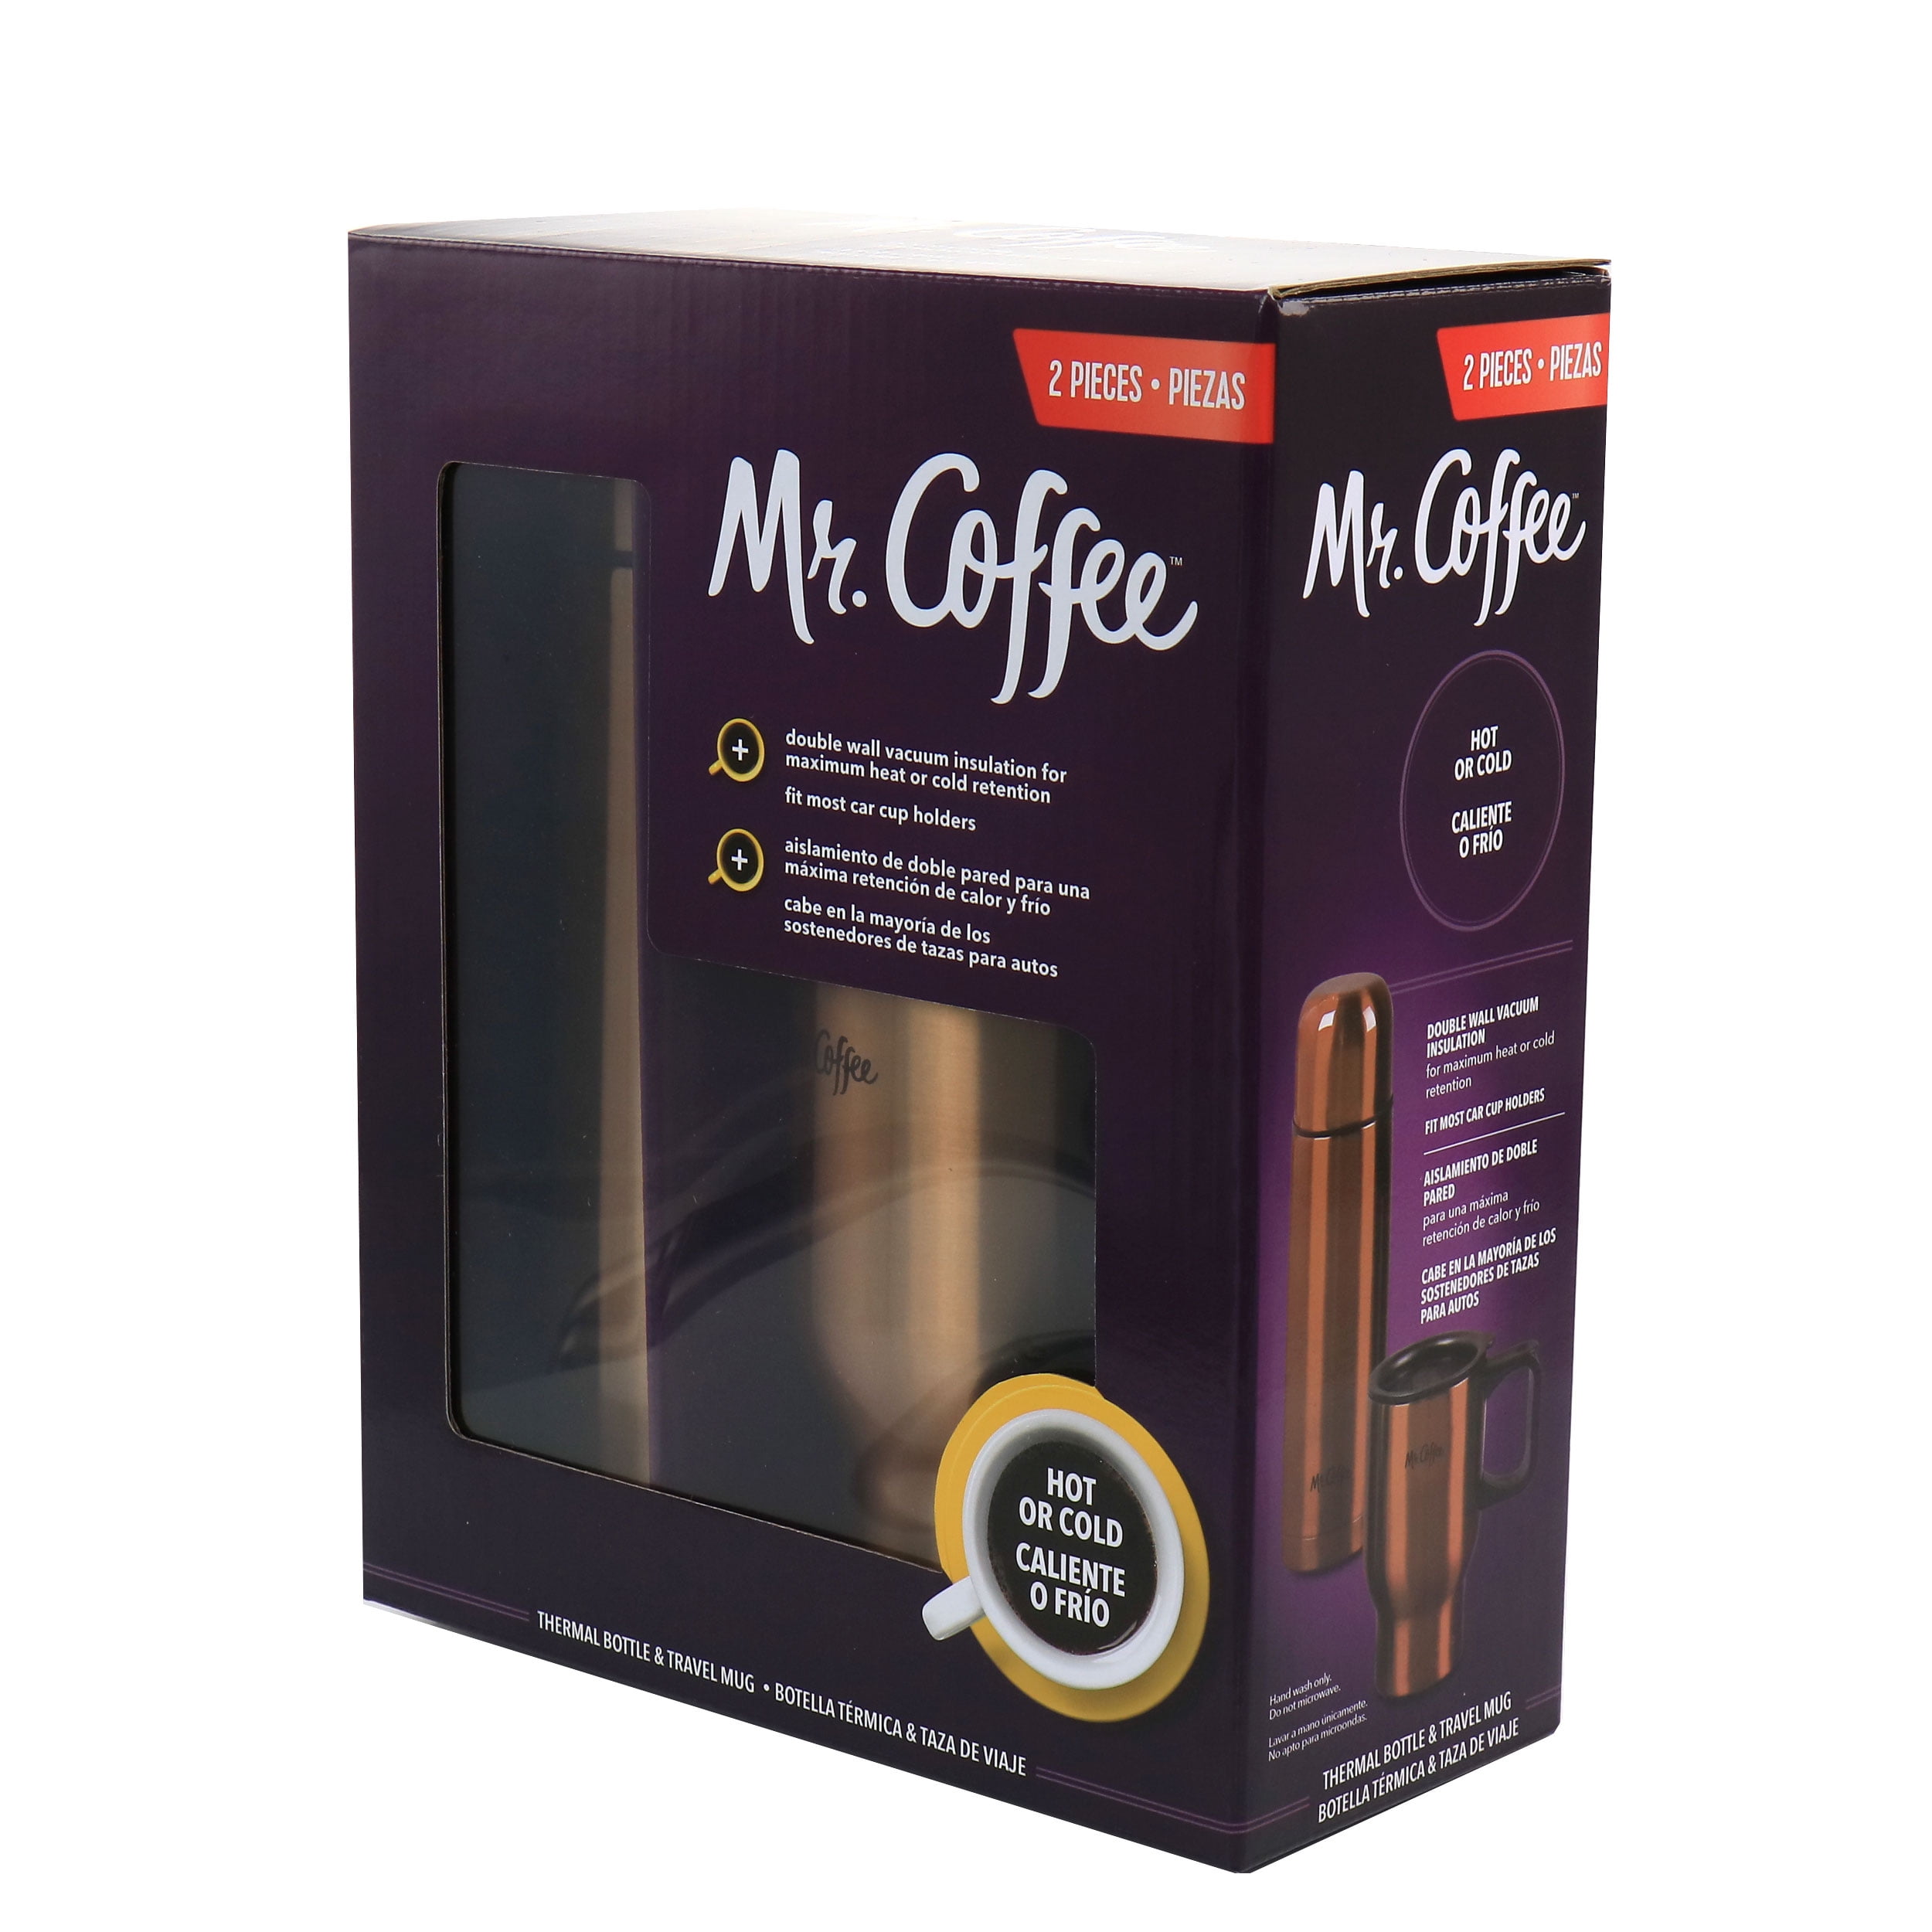 Mr. Coffee 2-Piece Javelin and Travel Mug Set, Red Metallic/Stainless Steel